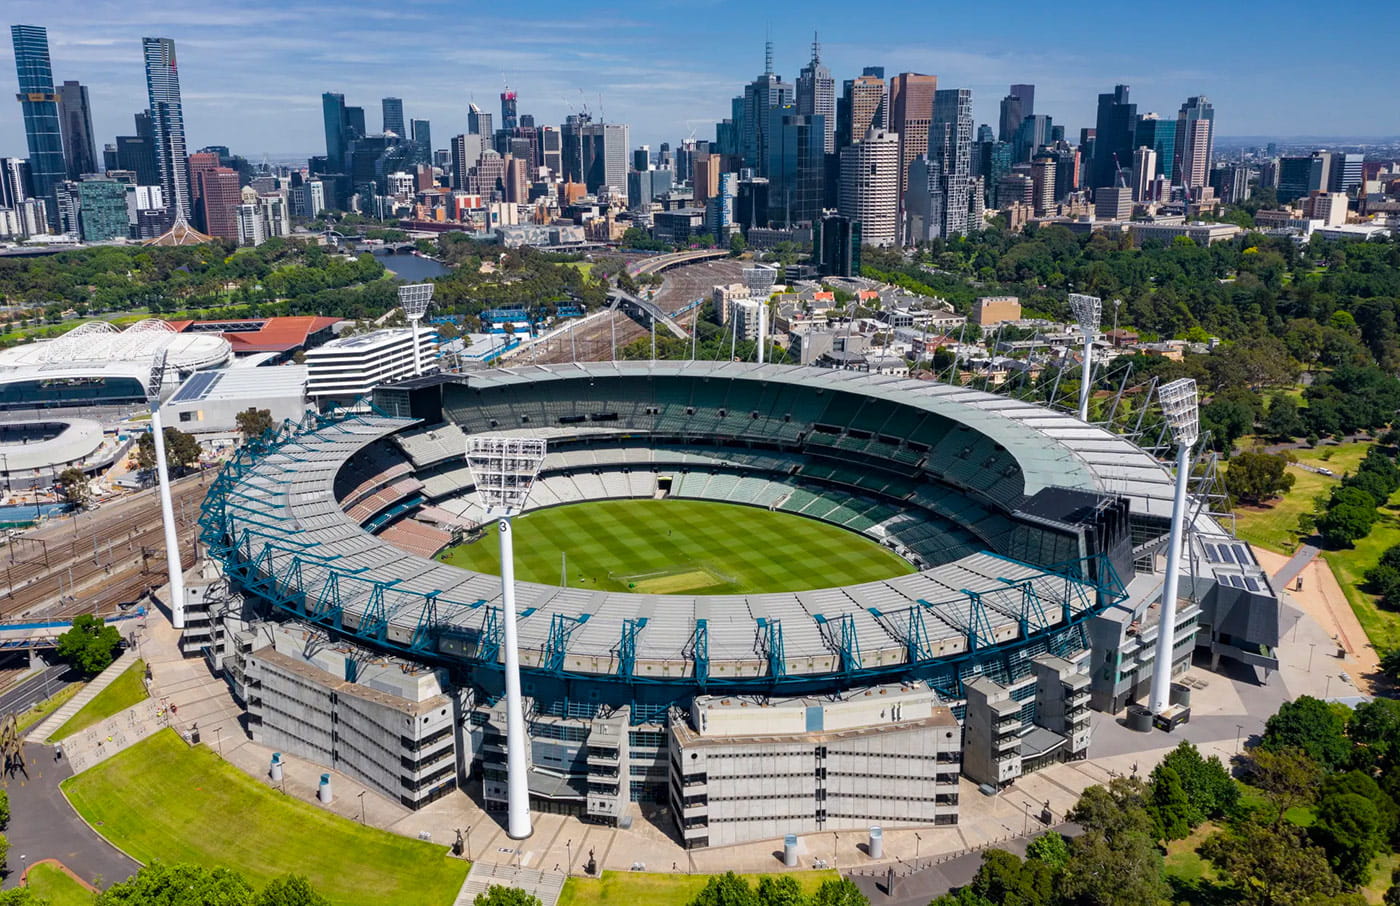 Крикет граунд. Мельбурн крикет Граунд. Мельбурн стадион крикет. Мельбурн крикет Граунд внутри. Melbourne Australia спорт.